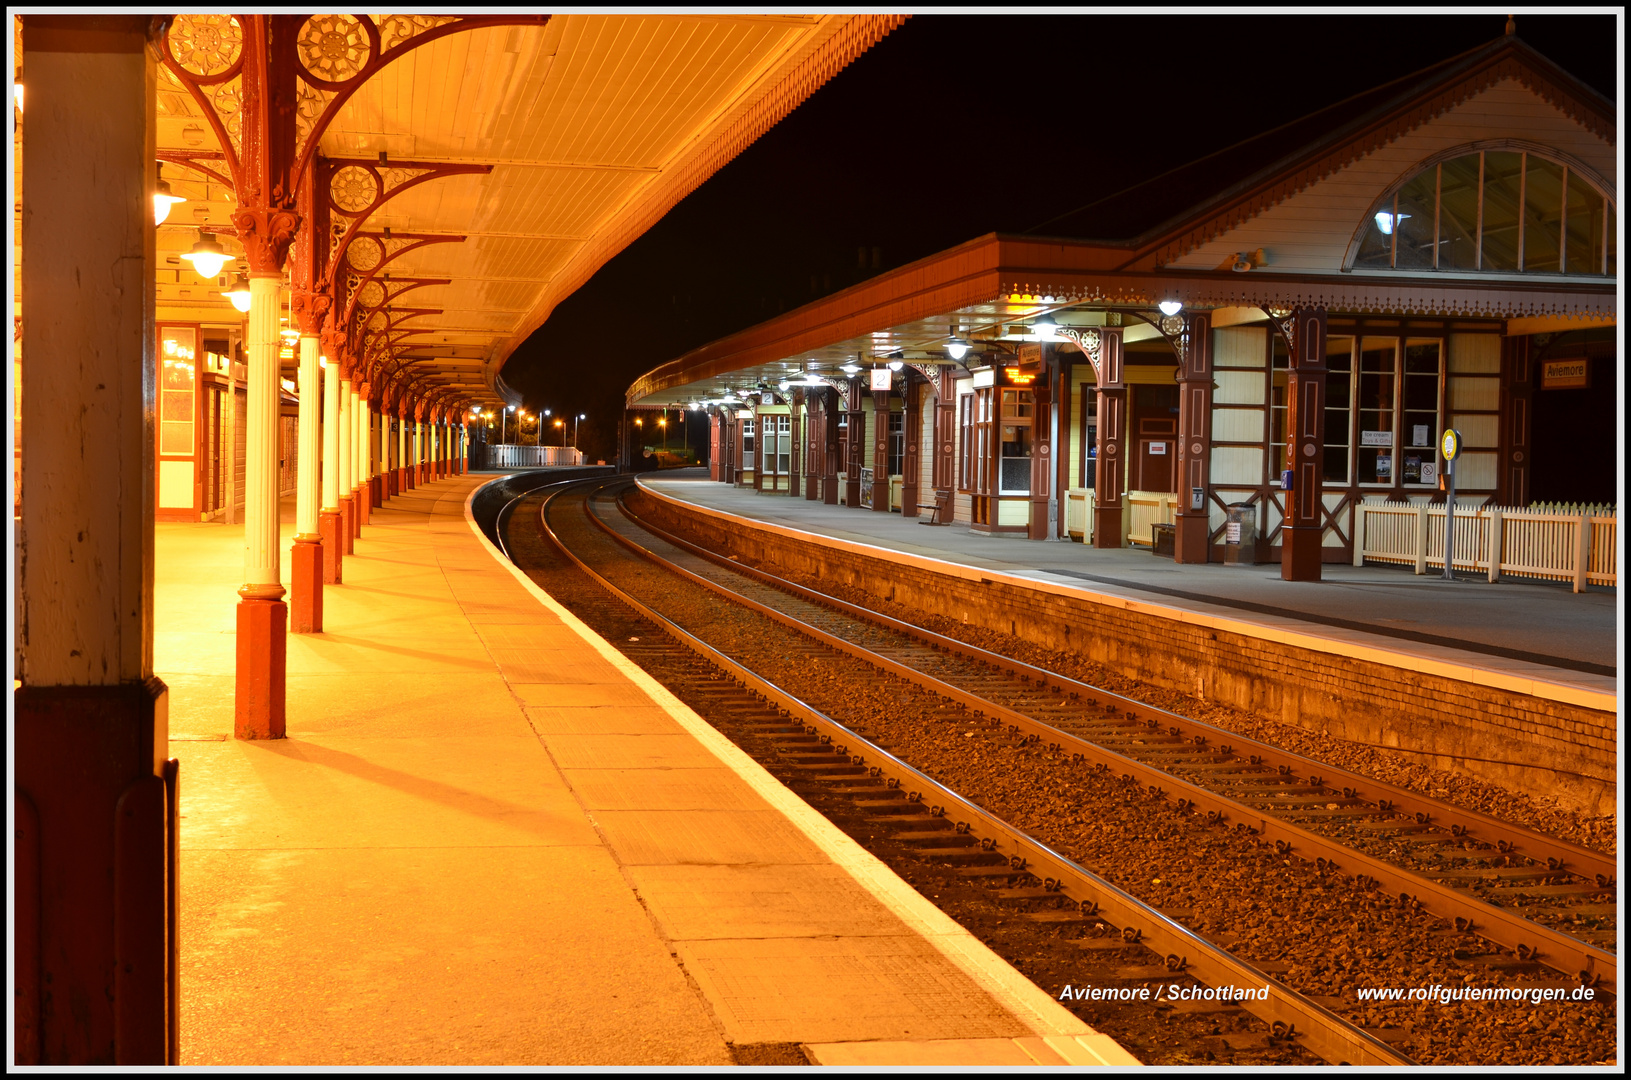 Nightshoot, Railway Station Aviemore